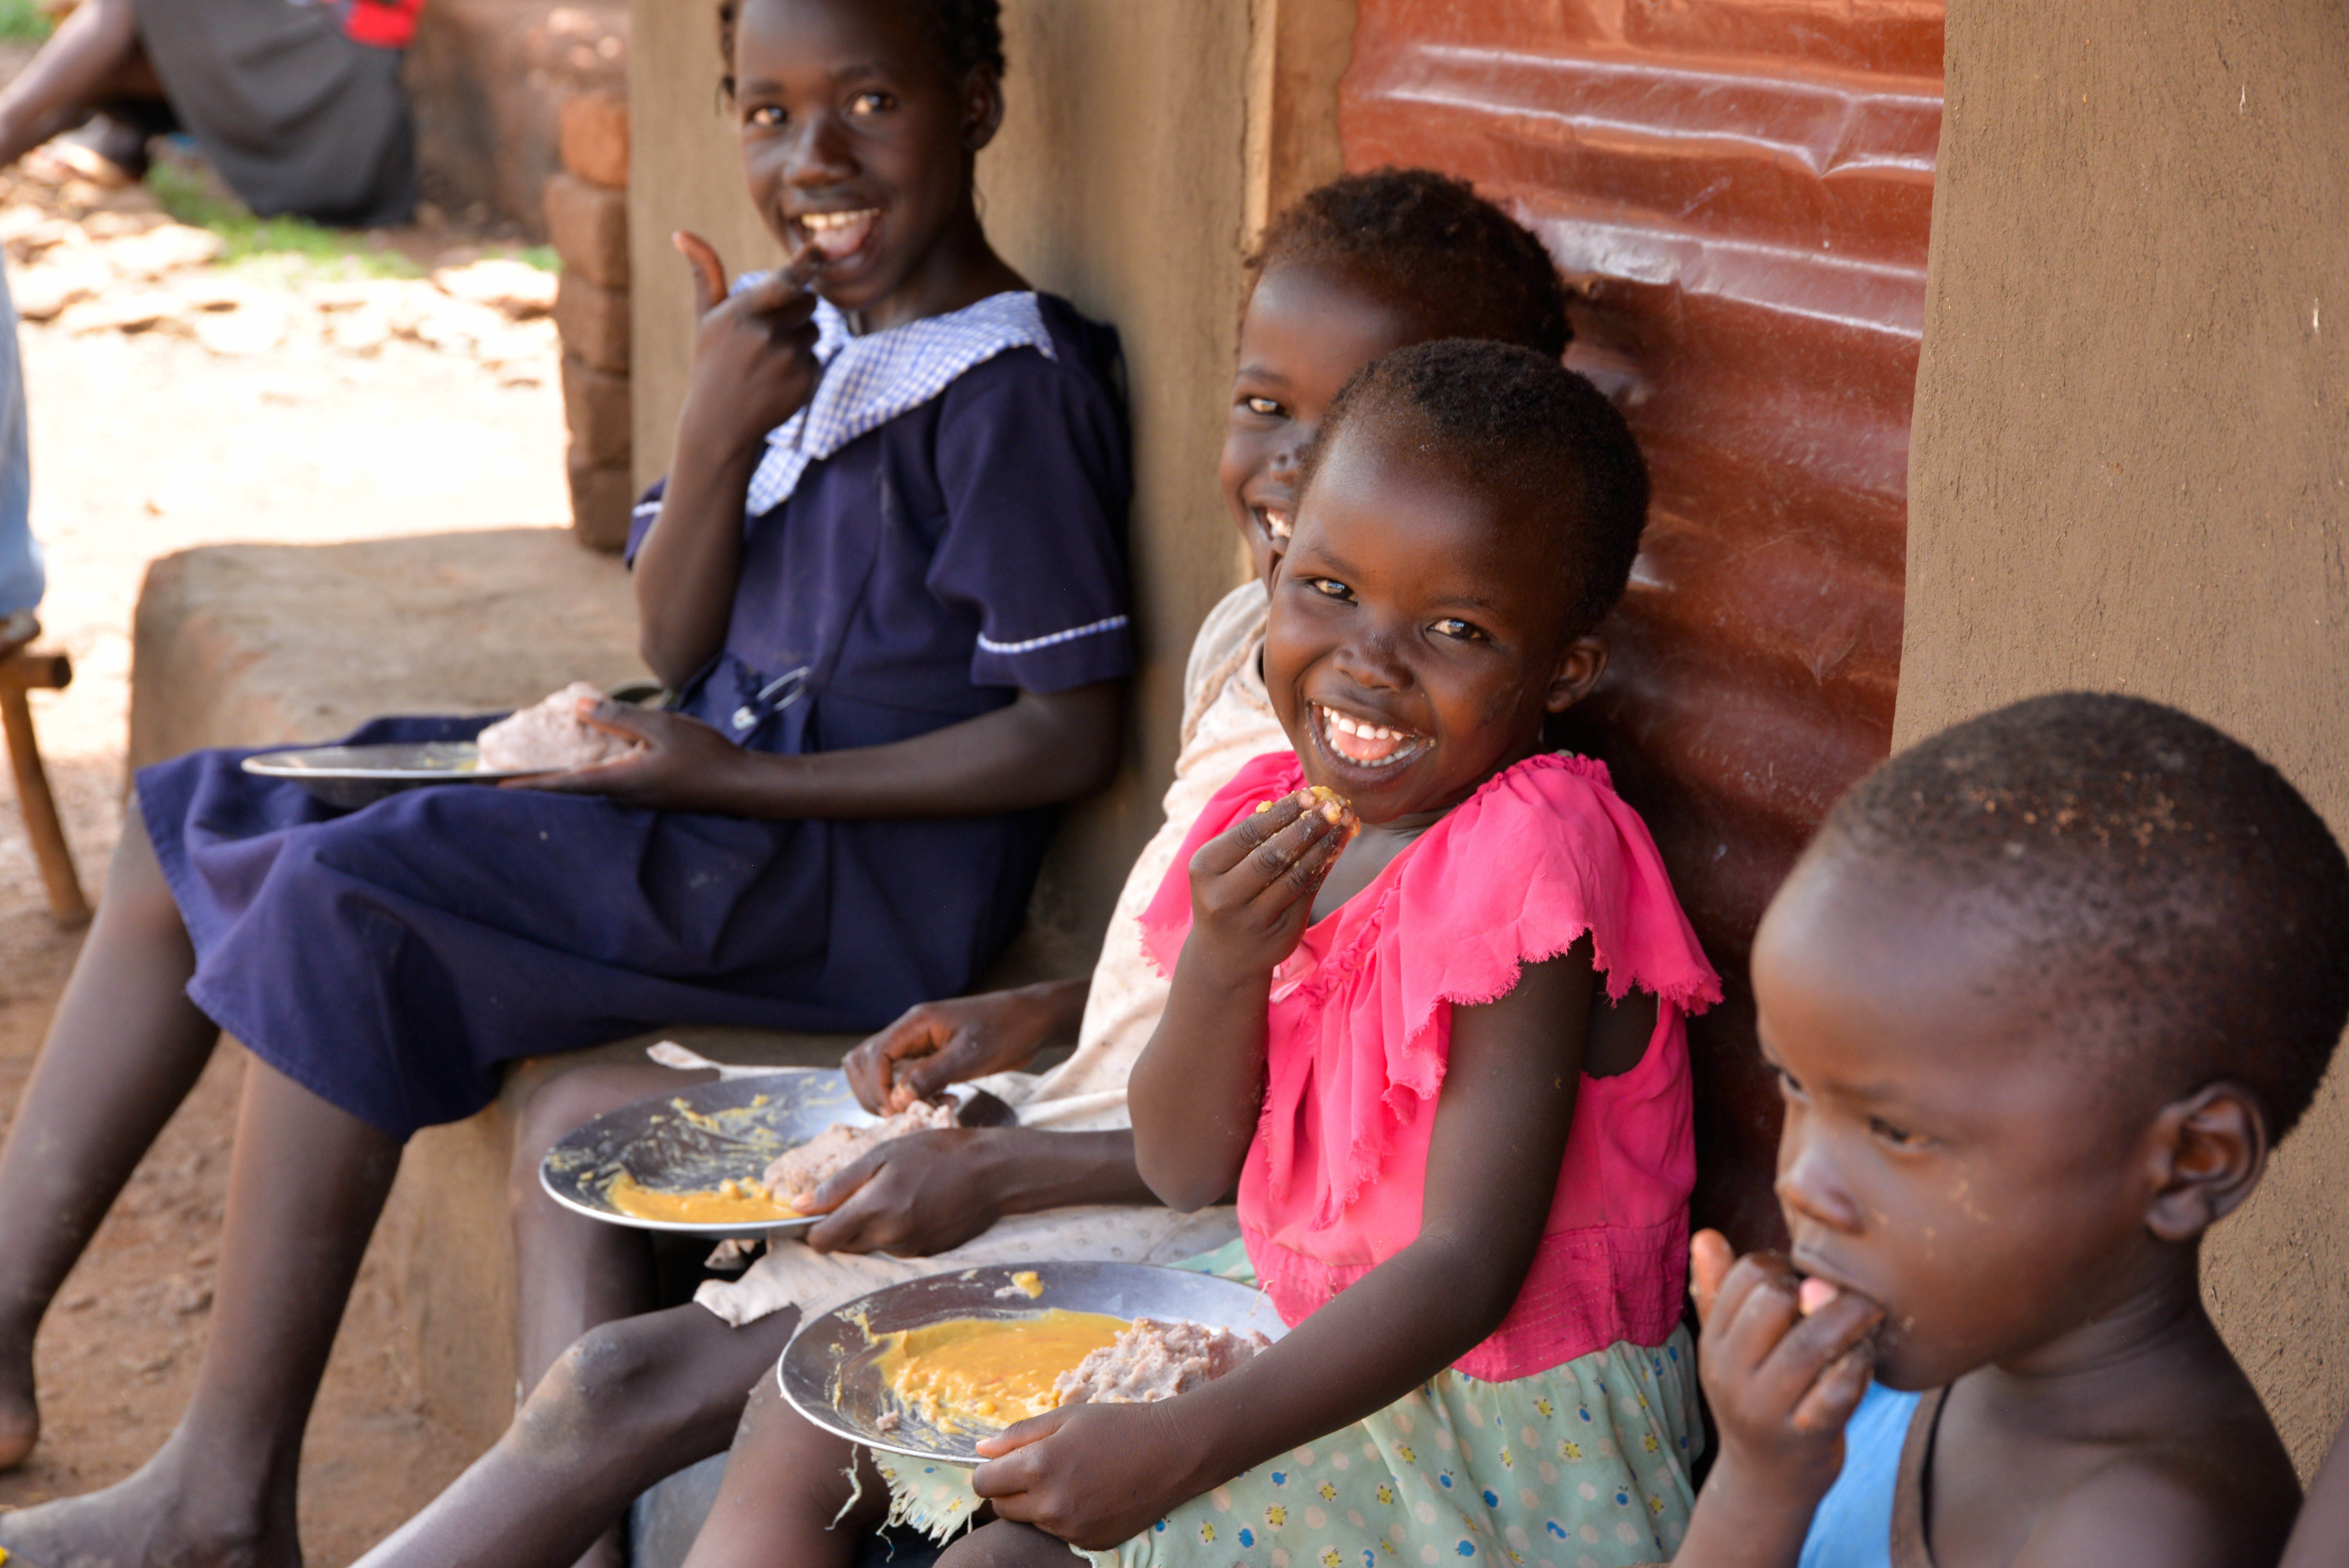 Refugee children from South Sudan enjoying their lunch.